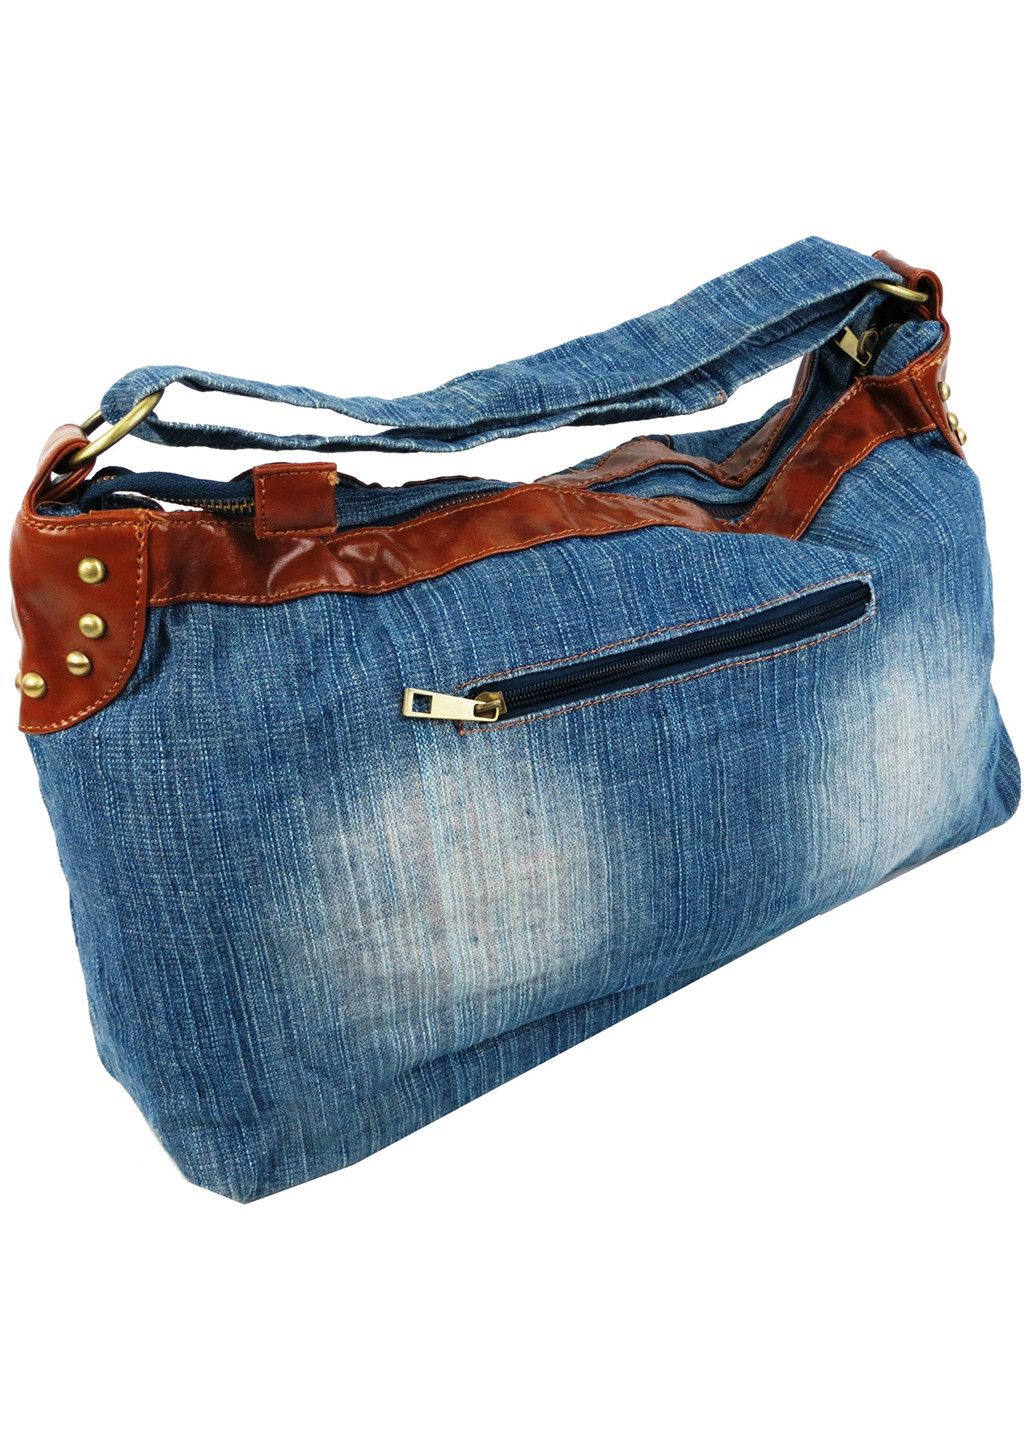 Женская джинсовая, коттоновая сумка 50х26х12,5 см FASHION JEANS (257065129)